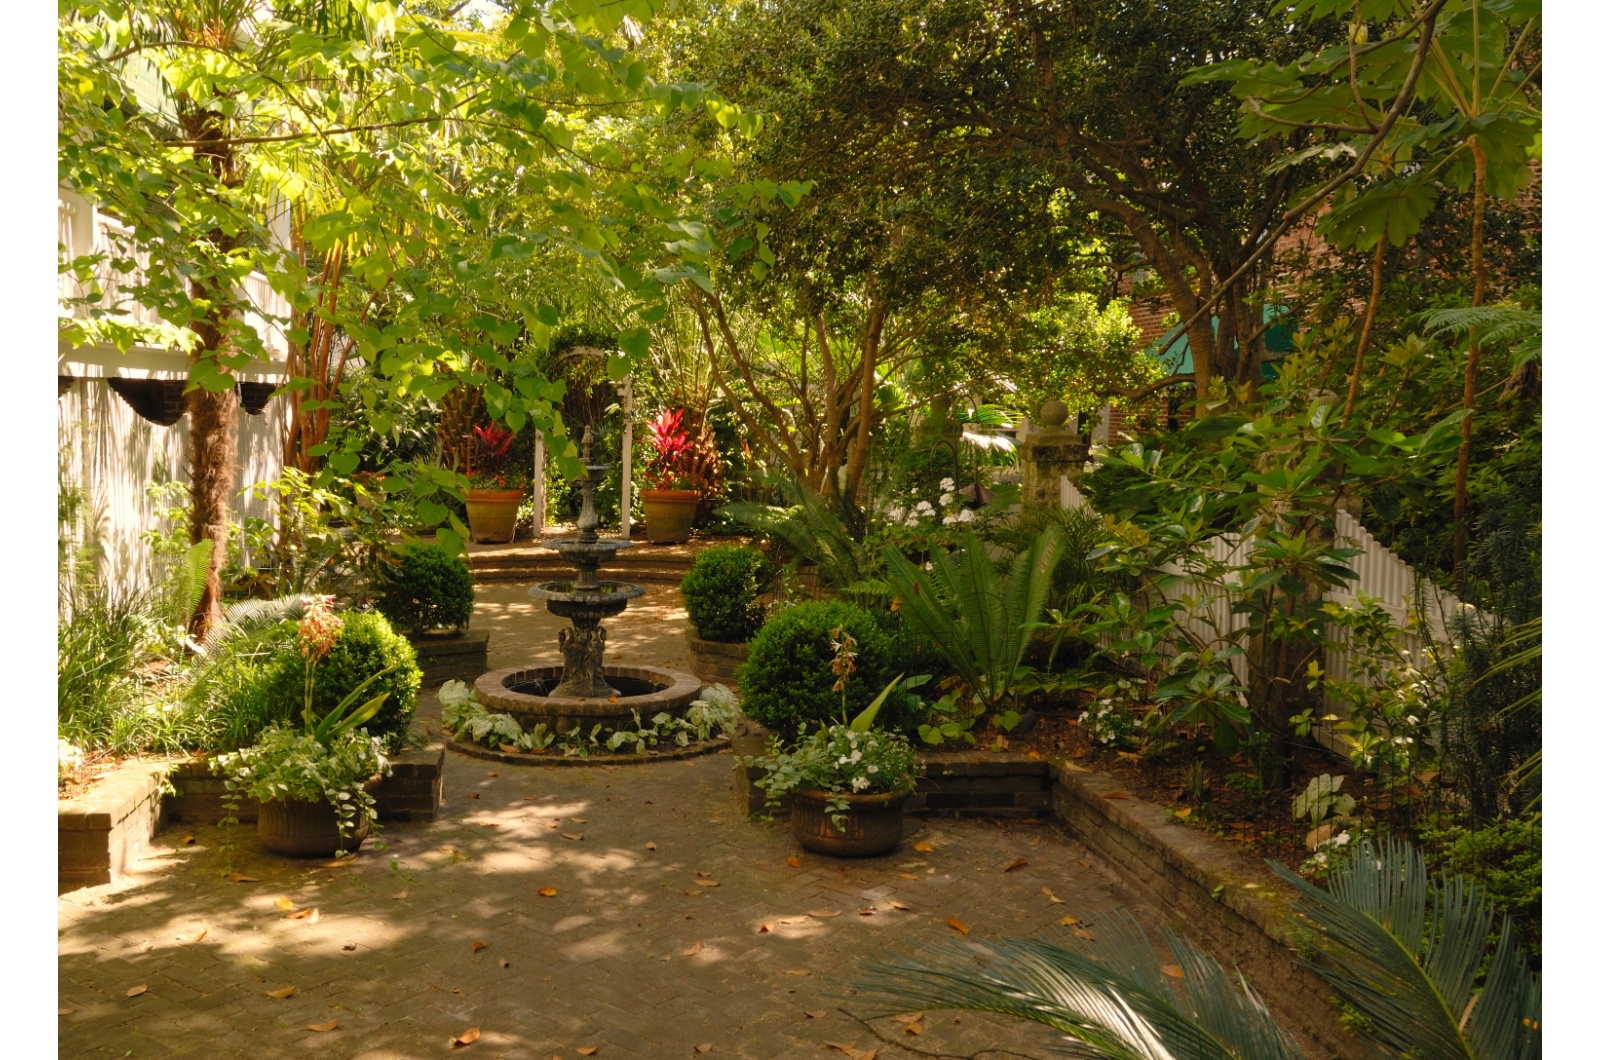 shaded garden